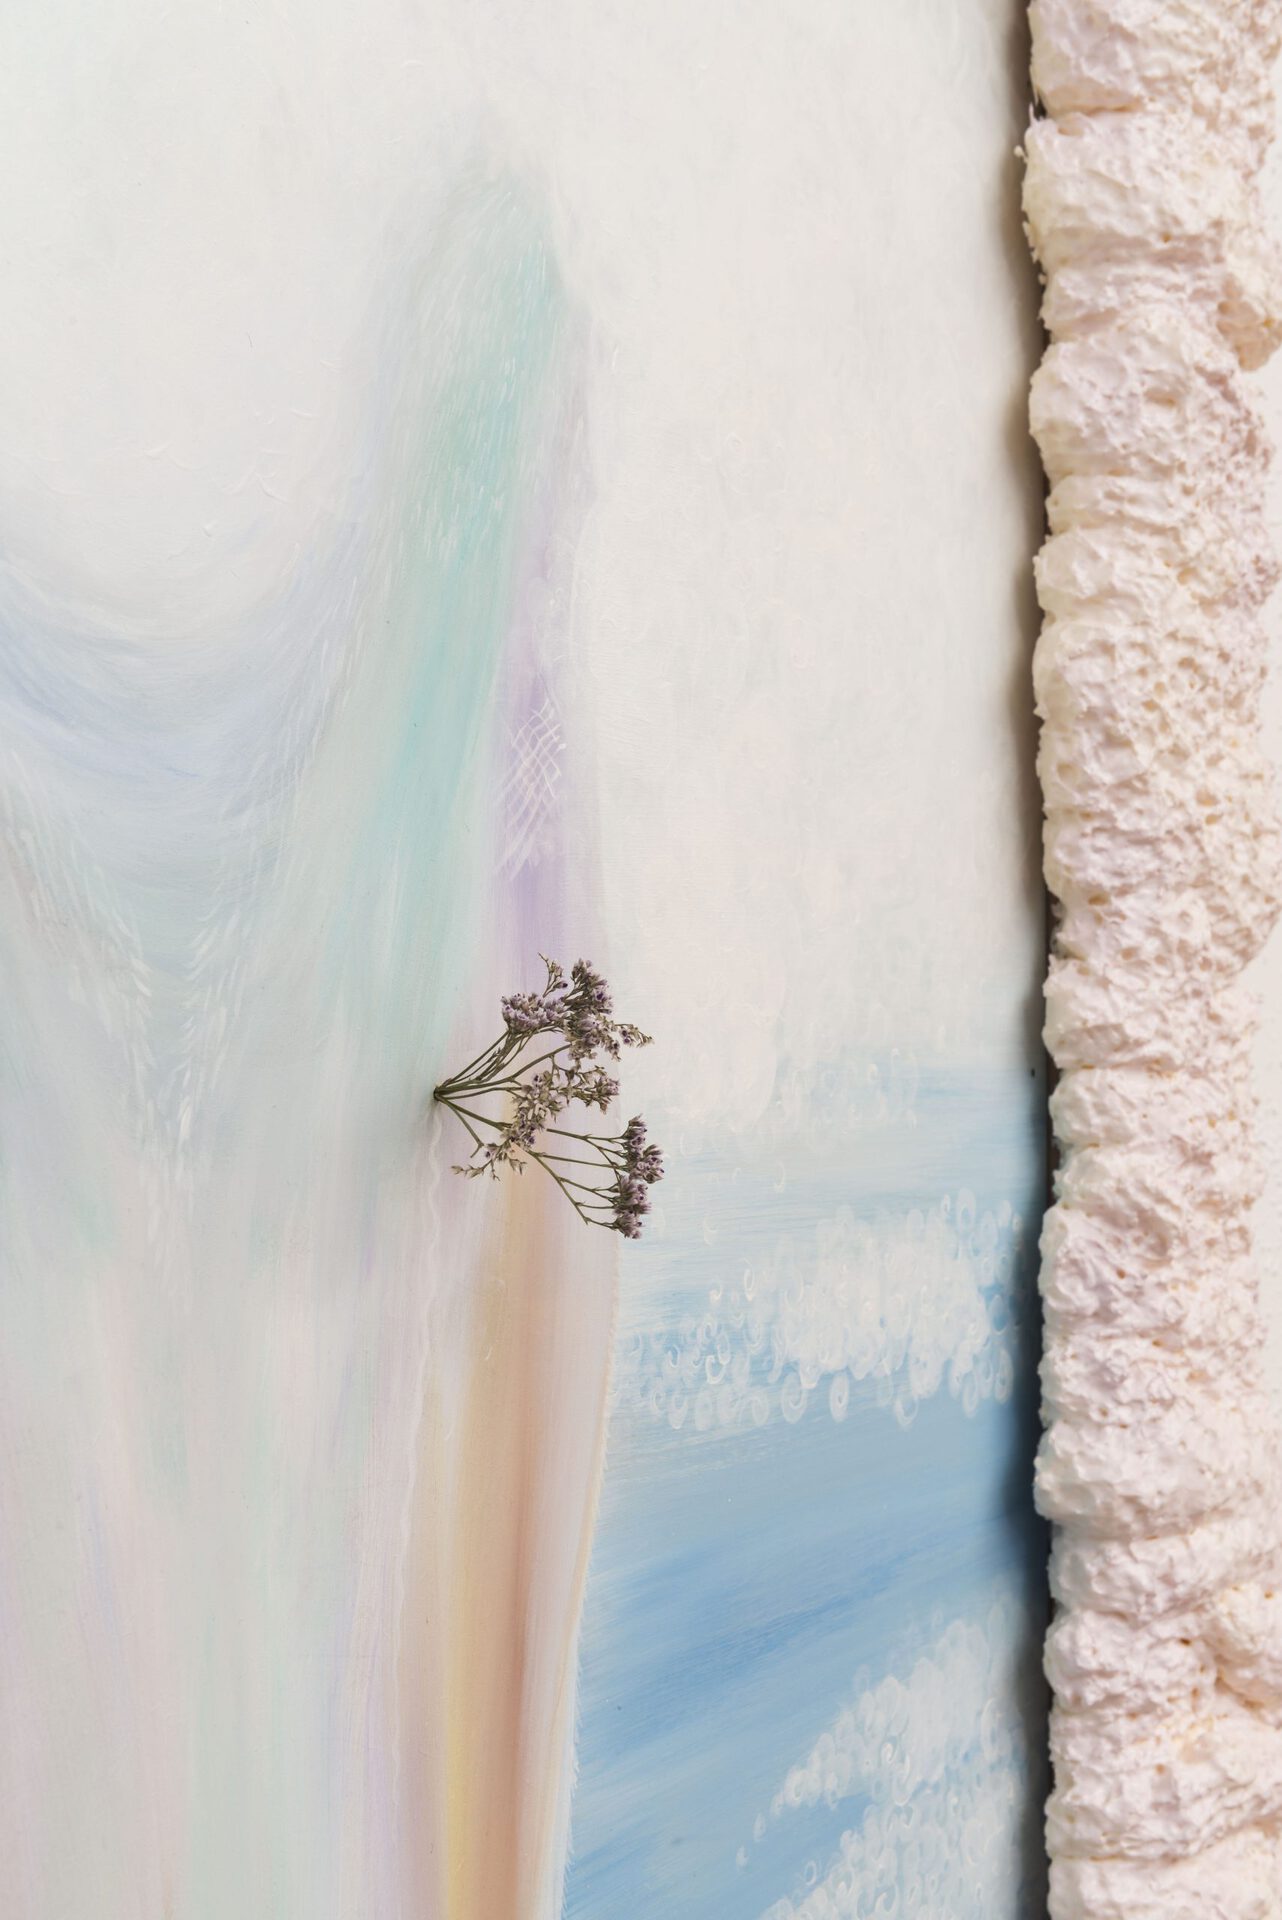 Annabelle Galland, Soleil vert (Pinterest is my new inspiration), 2021-2022, Acrylic on wood panel, expanding foam frame, flowers, 170 x 120 cm